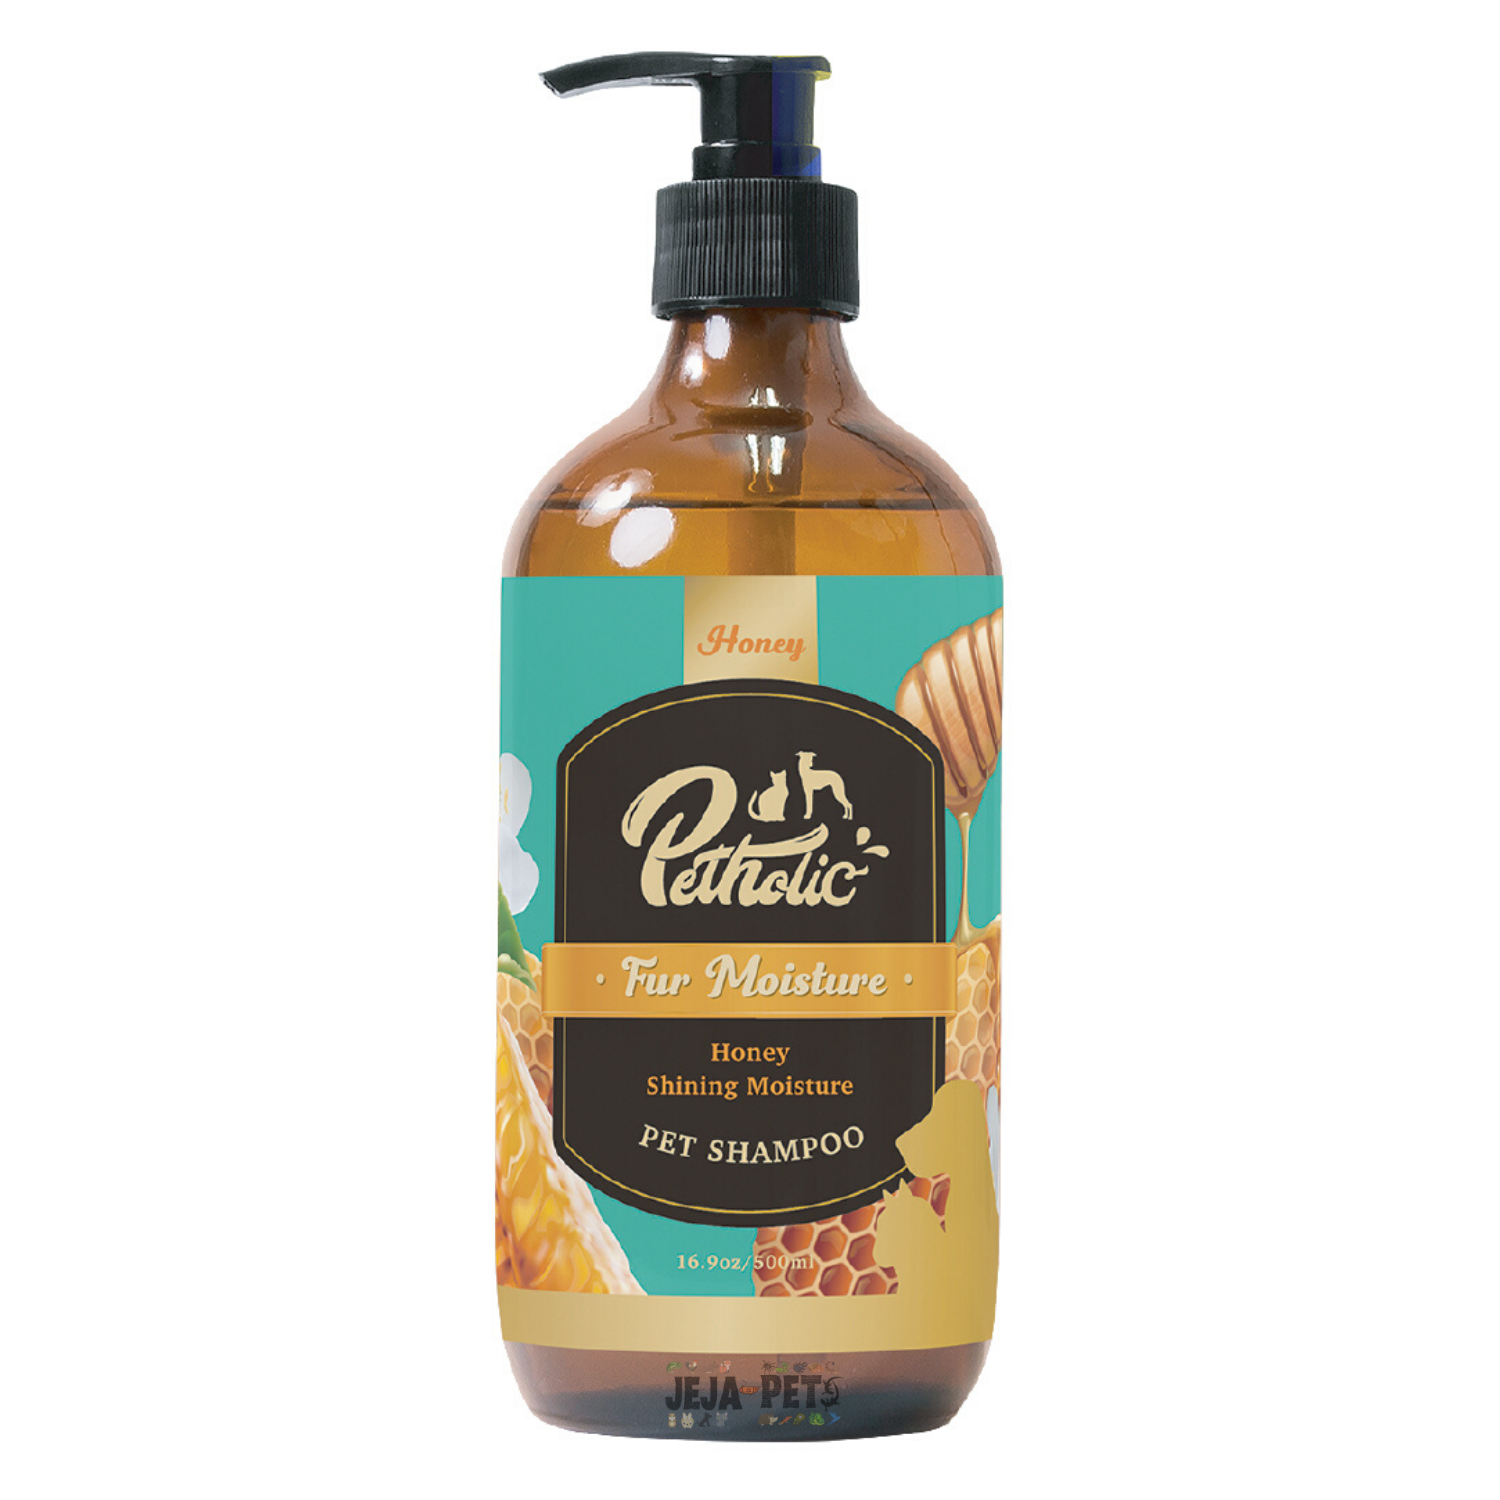 Petholic Honey Shine Moisturising Pet Shampoo - 500ml / 3785ml